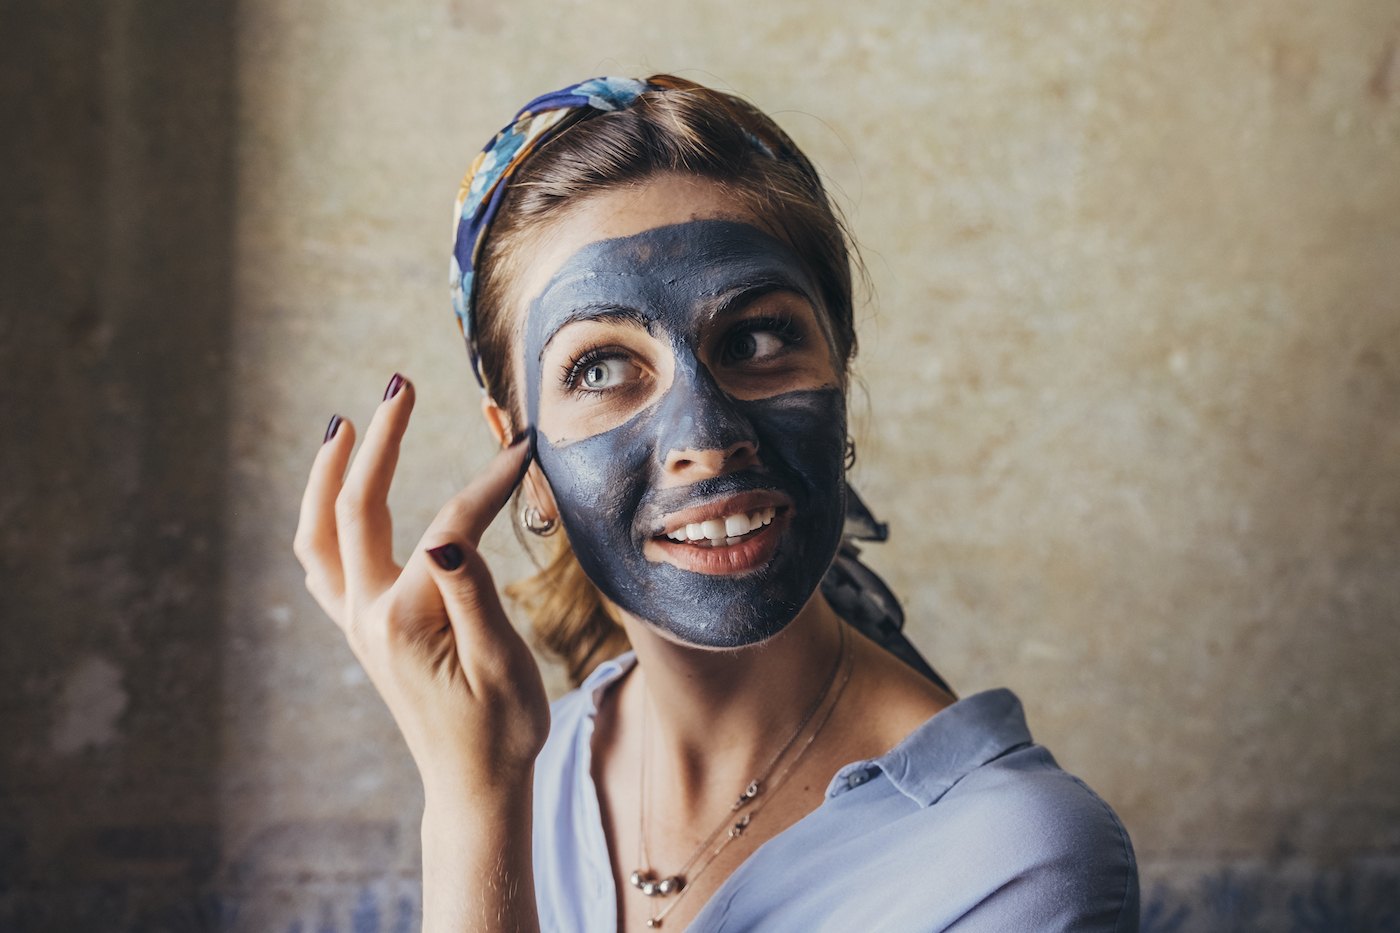 DIY moisturizing face masks